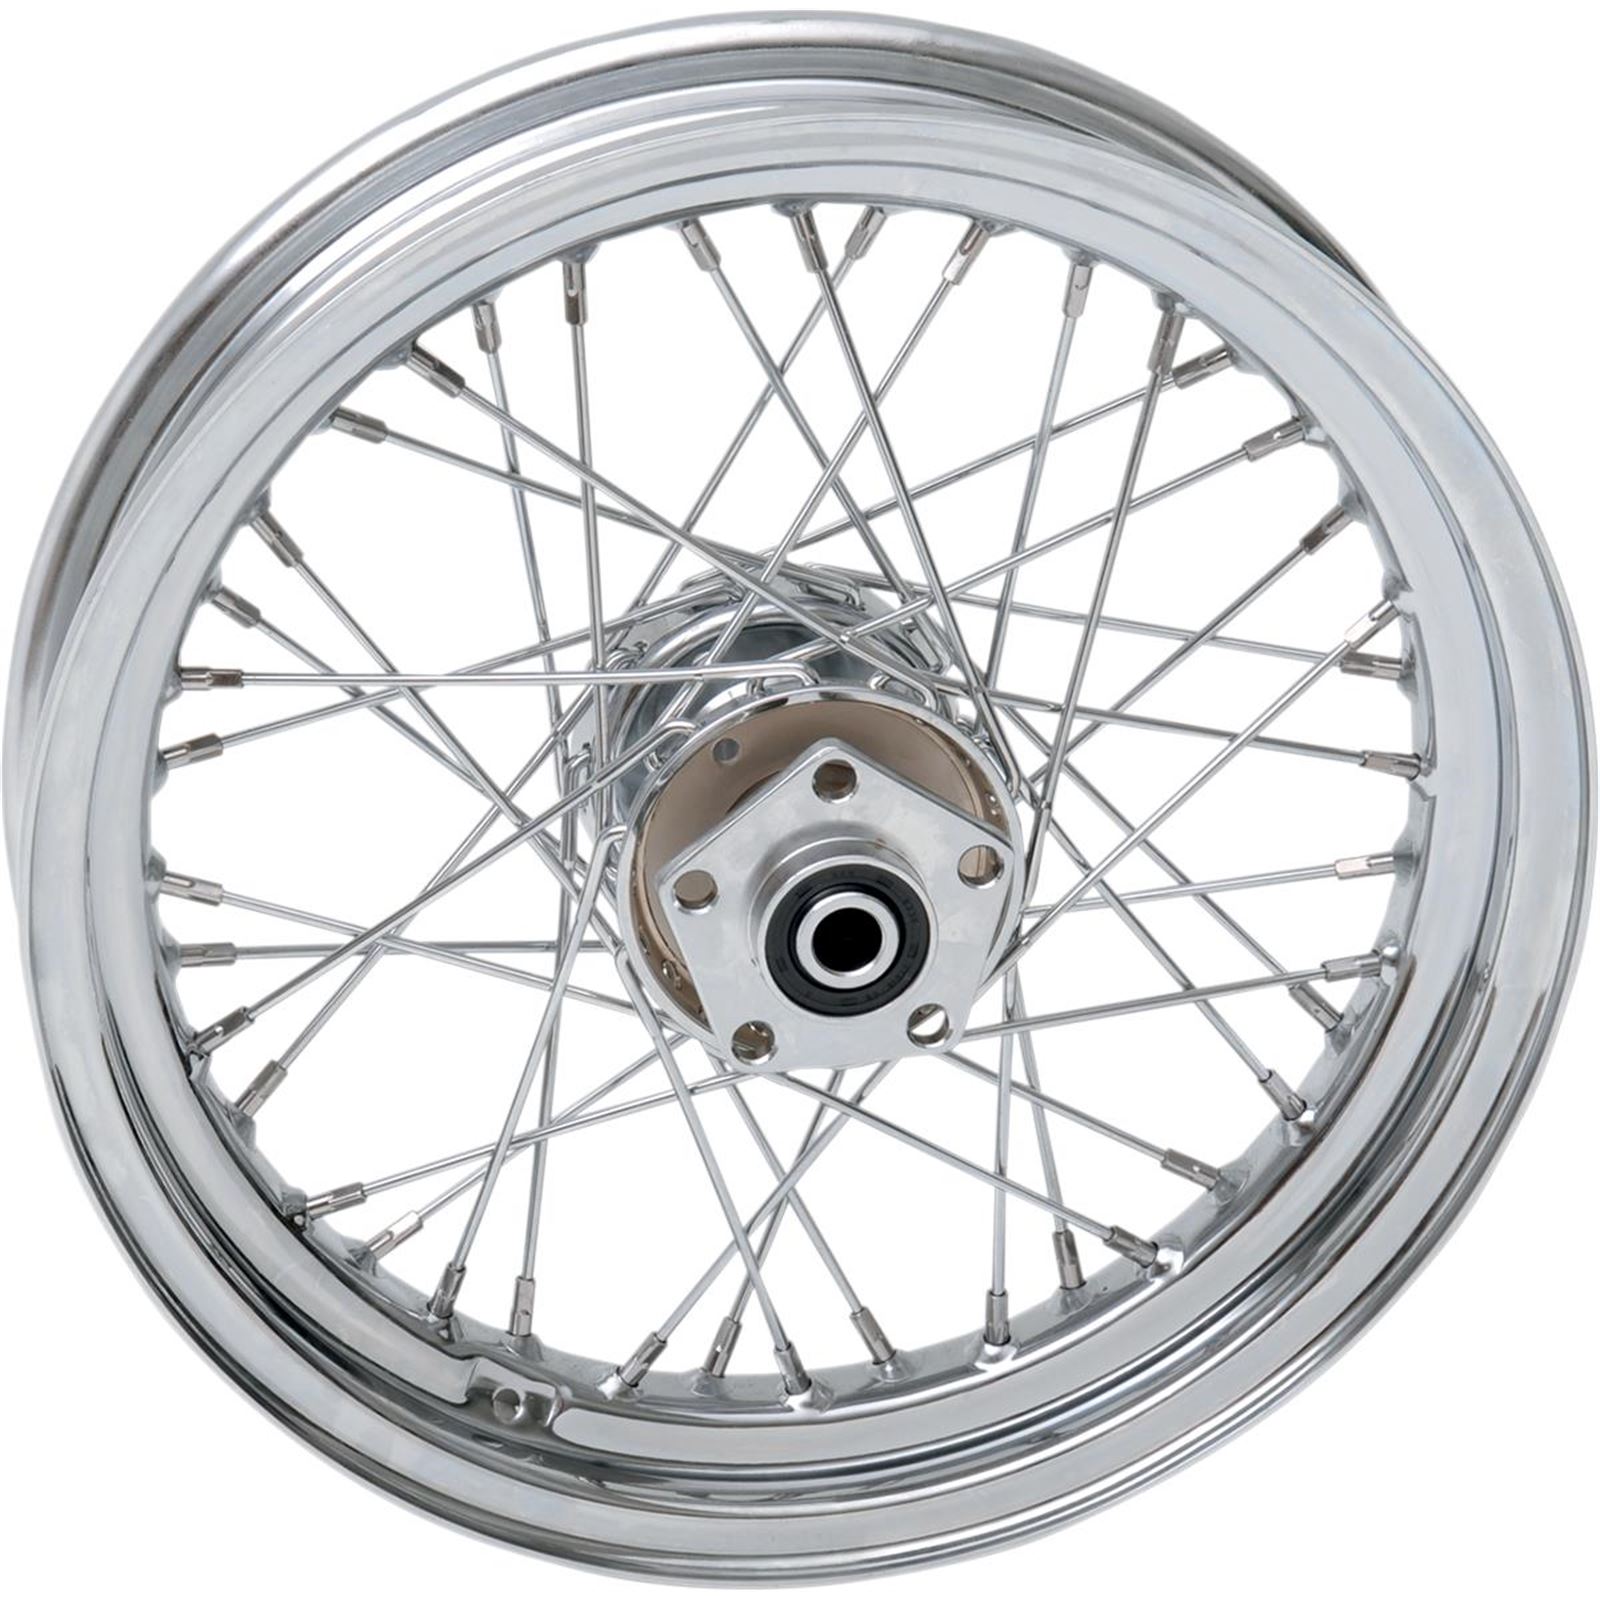 Drag Specialties Wheel Rear Chrome 16x3